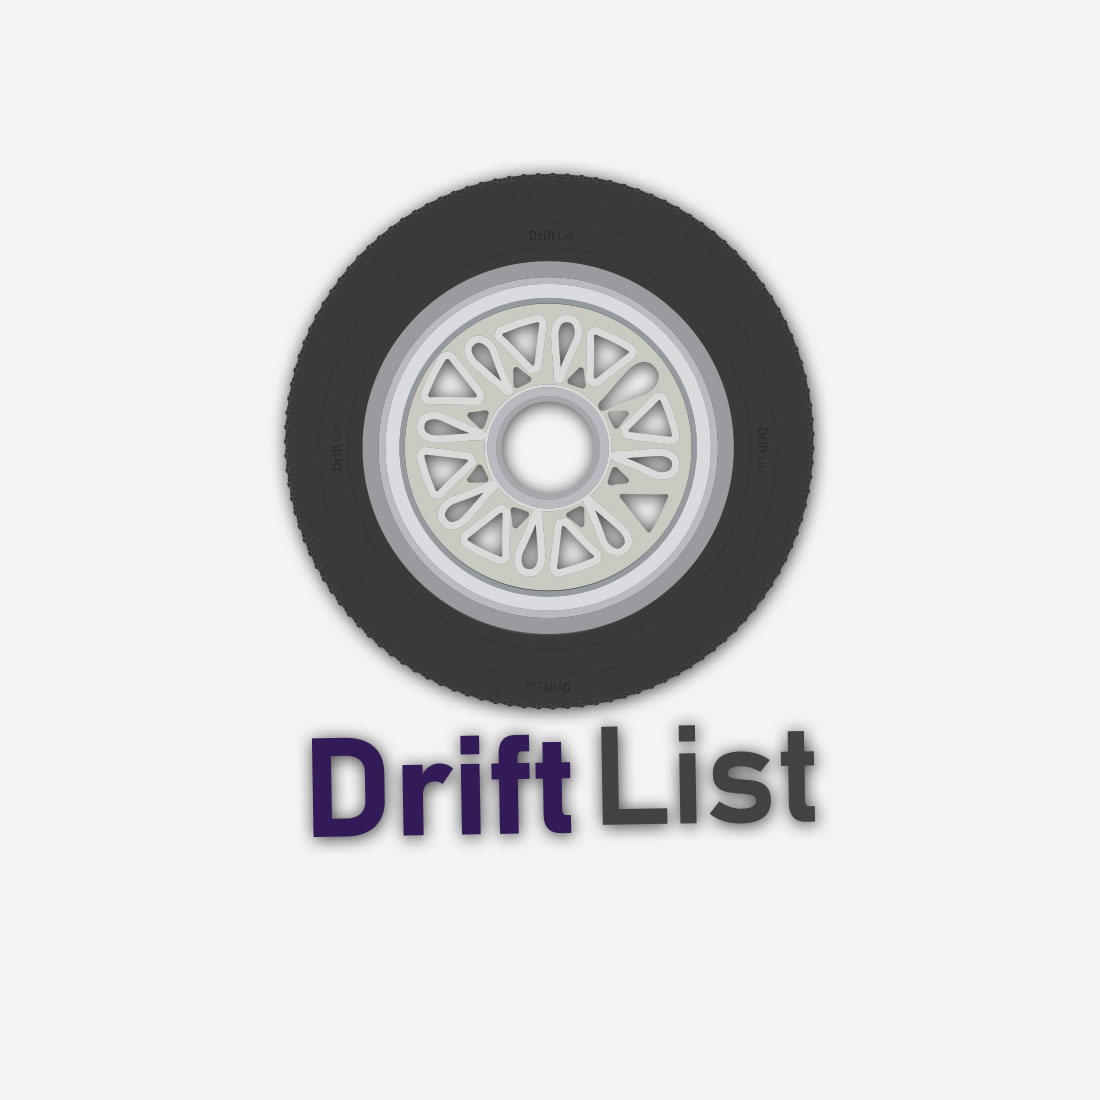 Drift List logo, preview image.